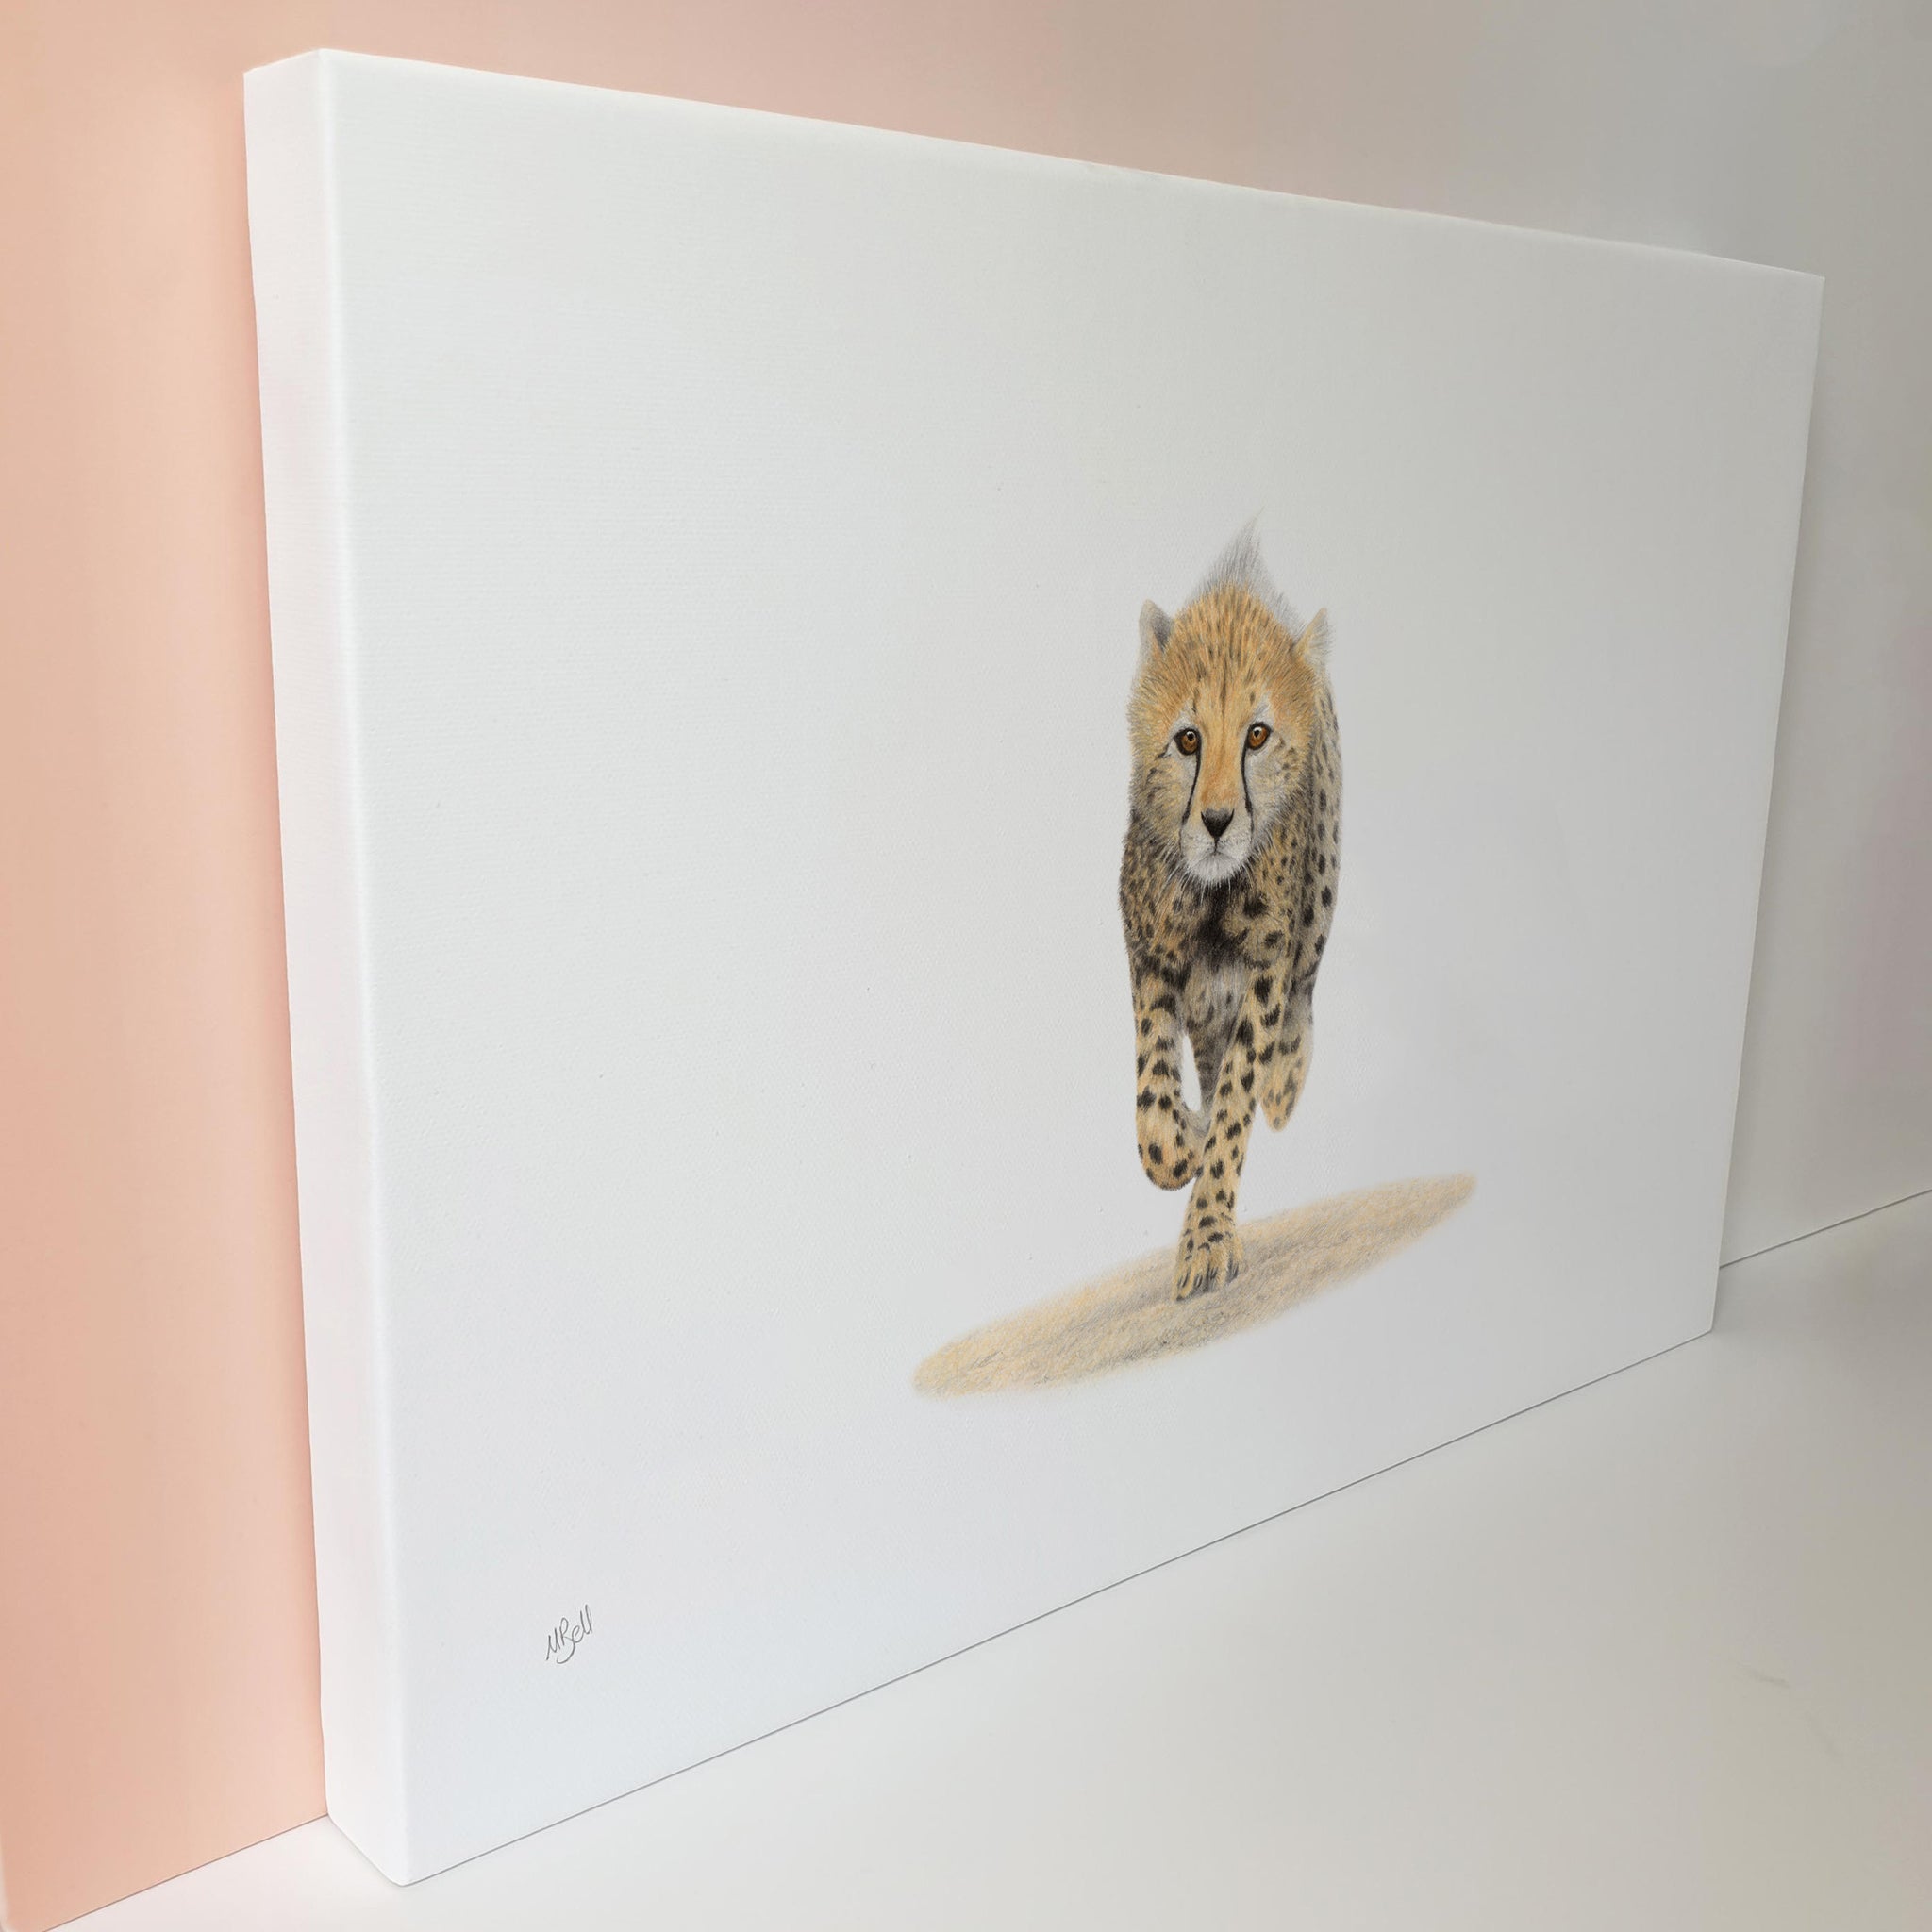 Running Cheetah cub on canvas wildlife art print